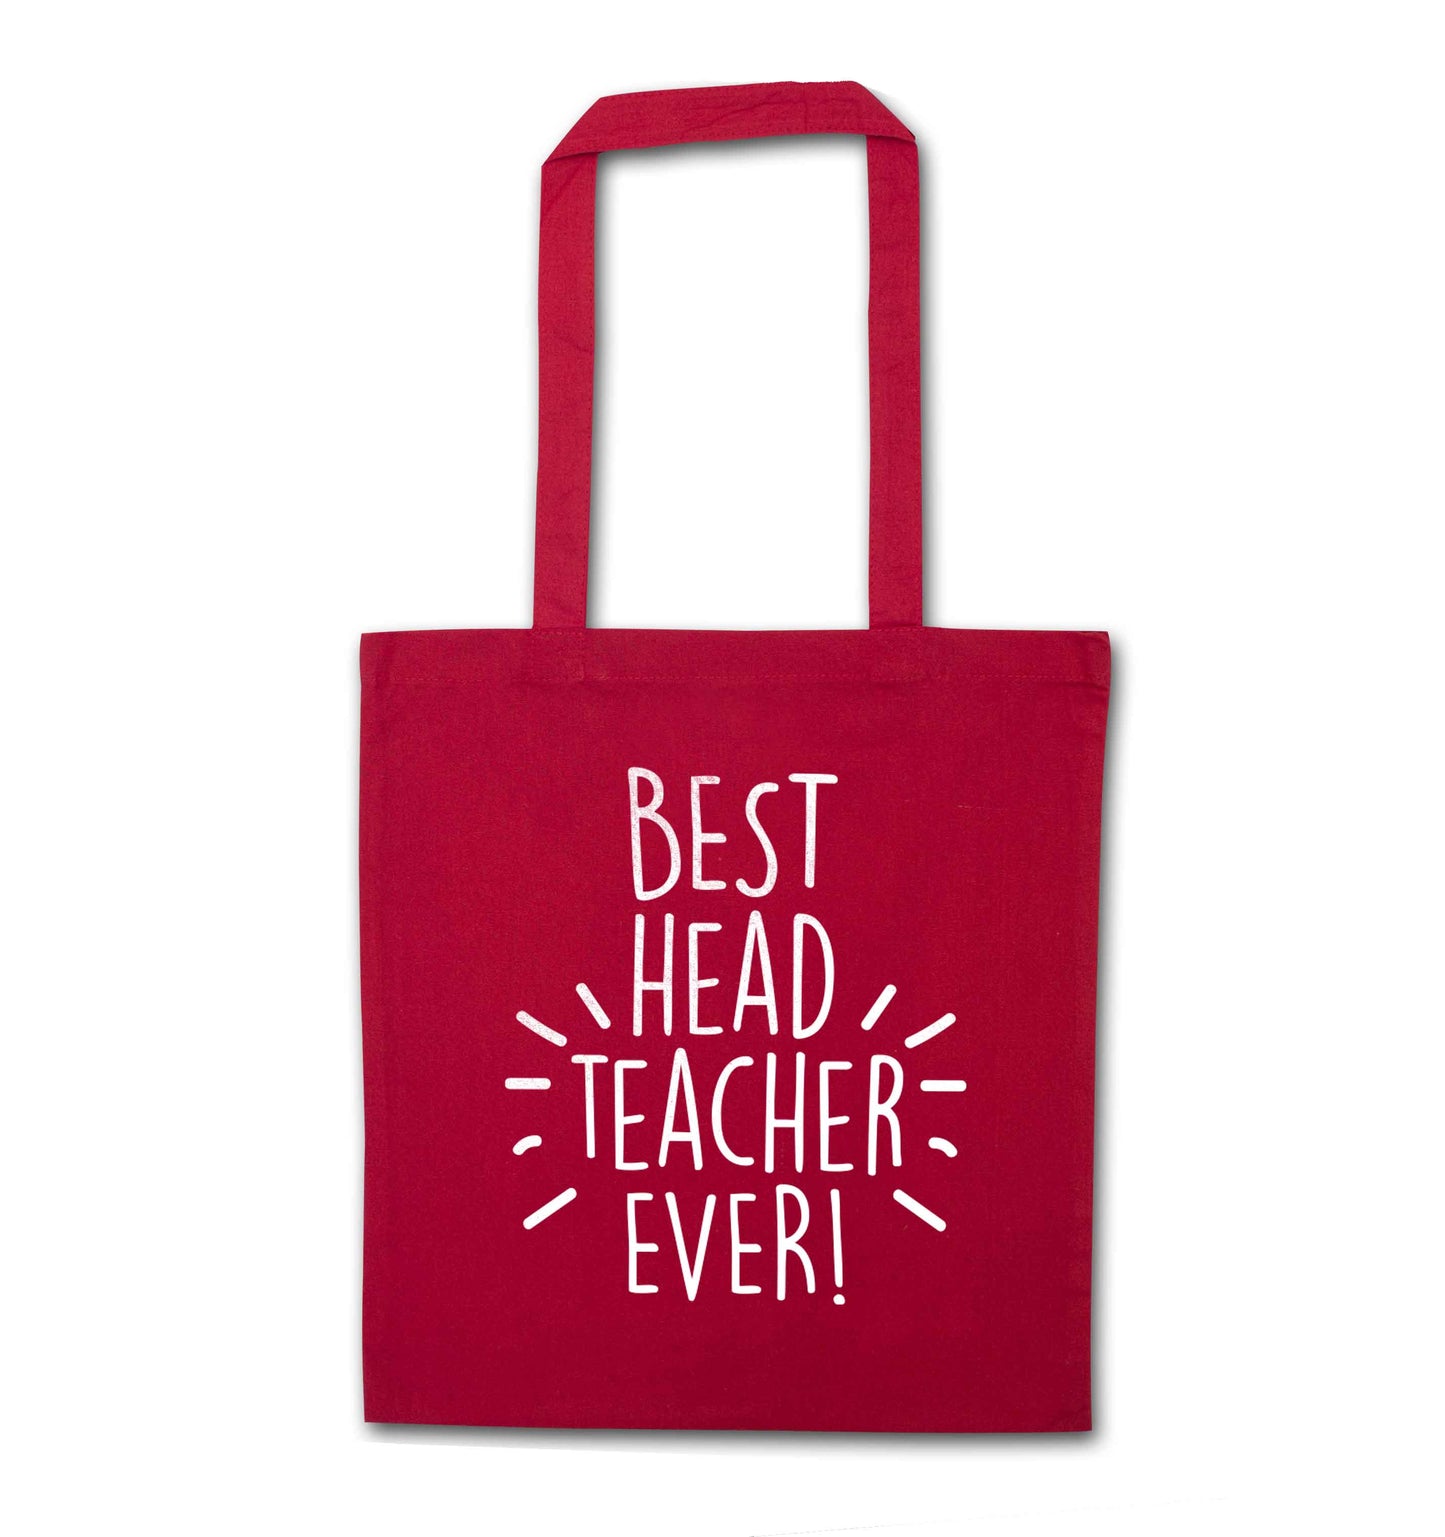 Best head teacher ever! red tote bag